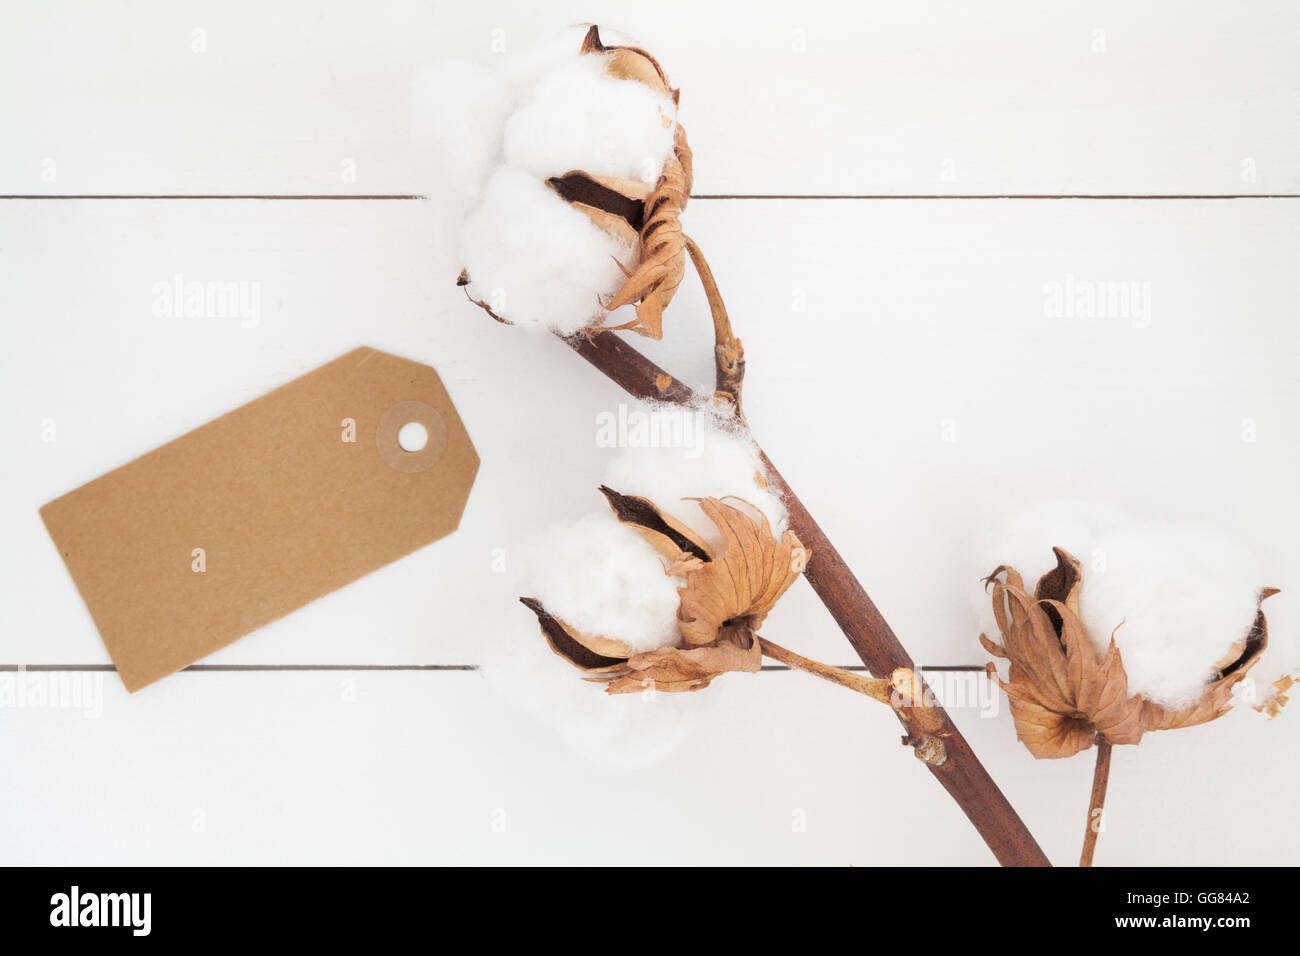 Gift tag on white background Stock Photo - Alamy